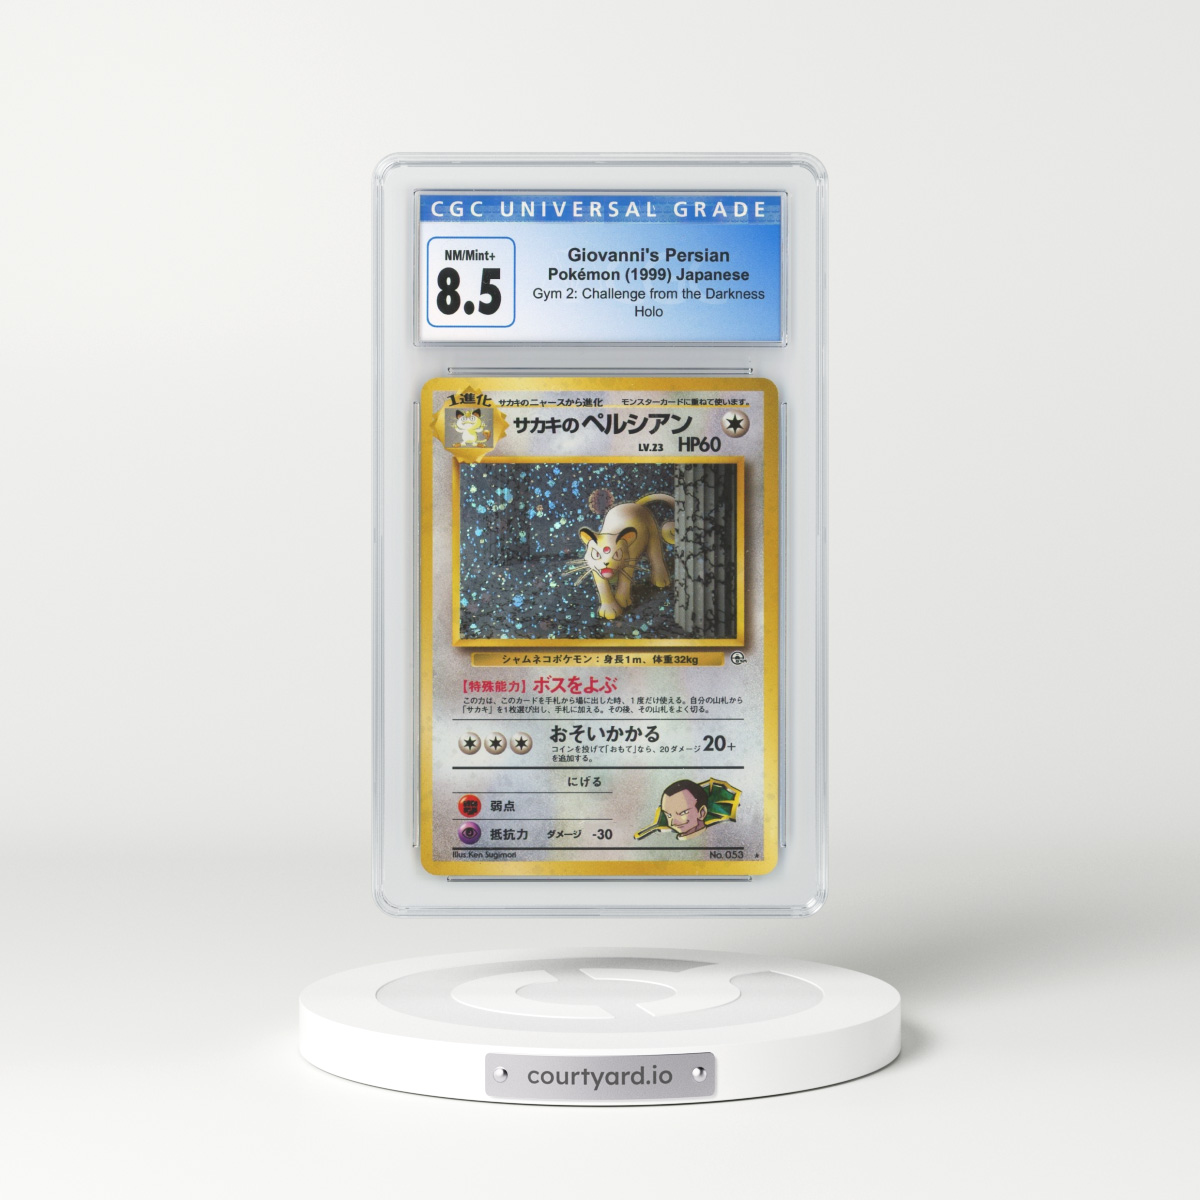 Kartana GX - The Awoken Hero #53 Pokemon Card